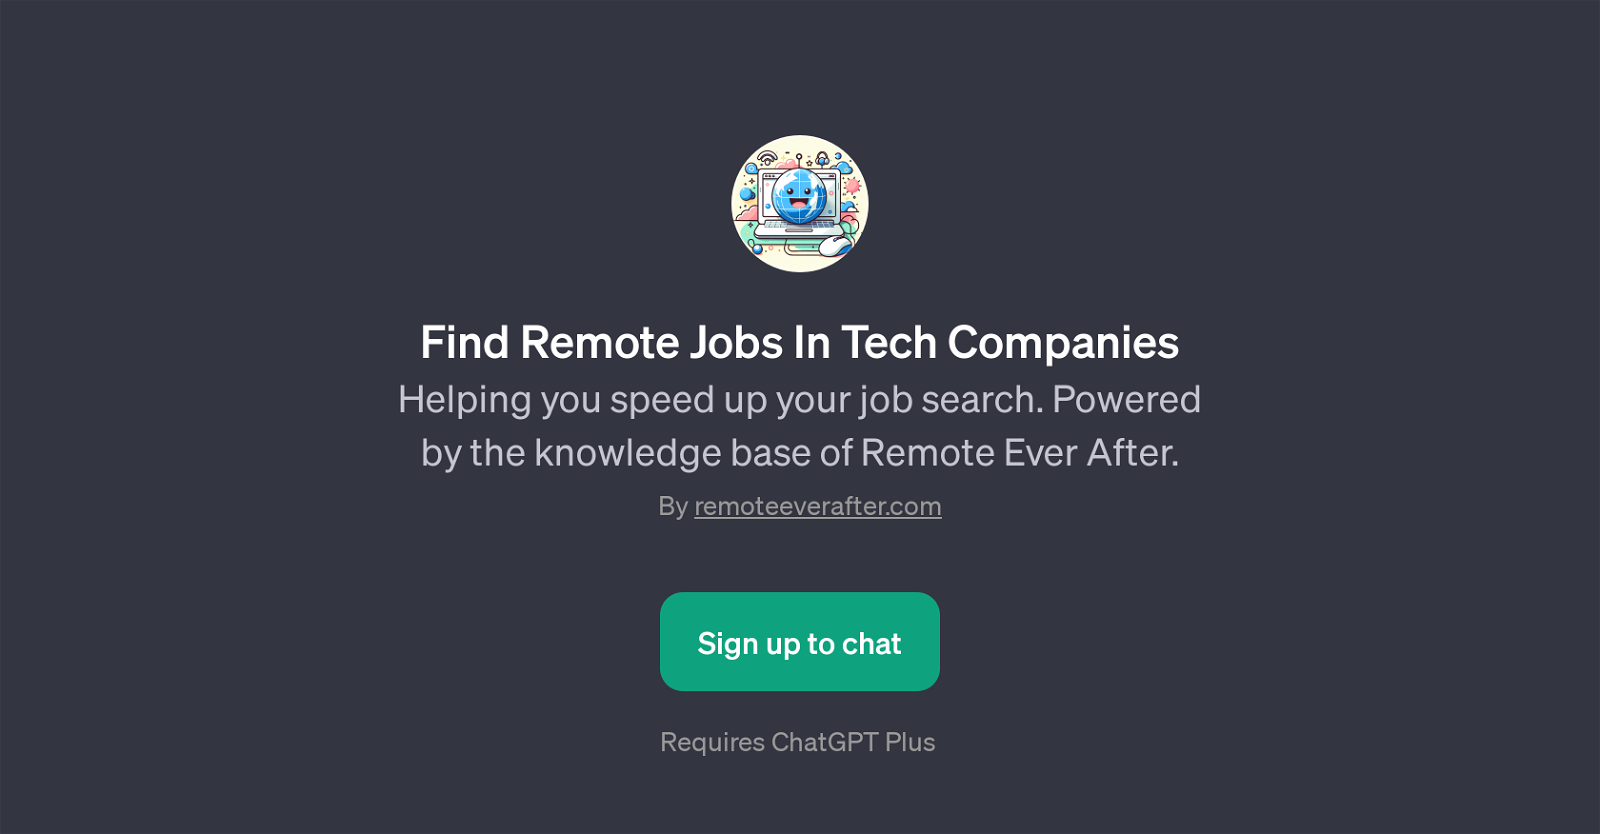 Find Remote Jobs In Tech Companies website